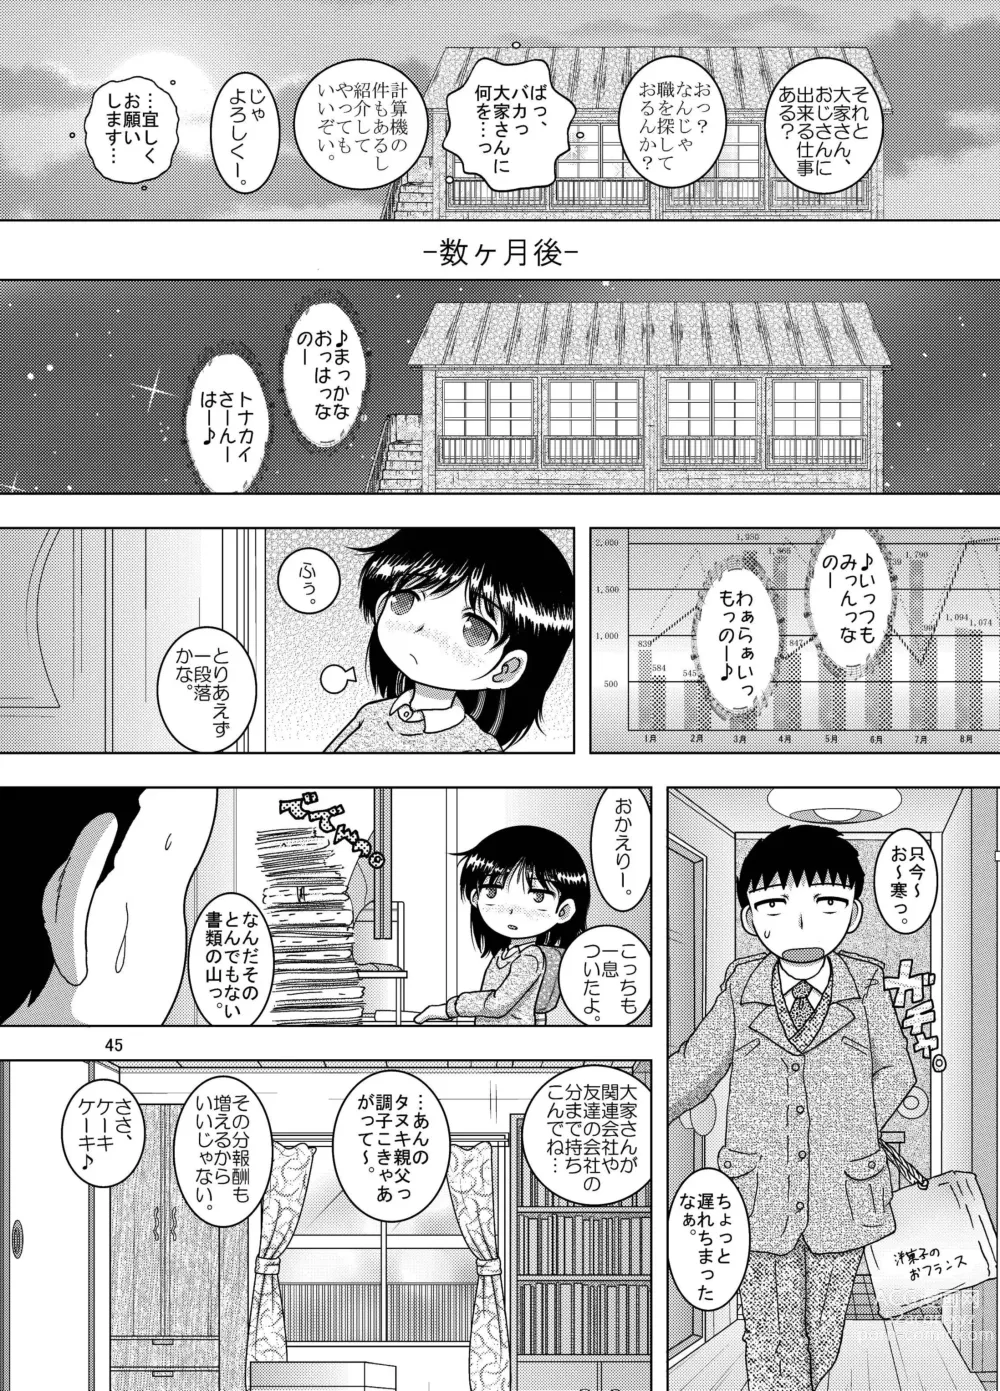 Page 45 of doujinshi Hoko Kankan